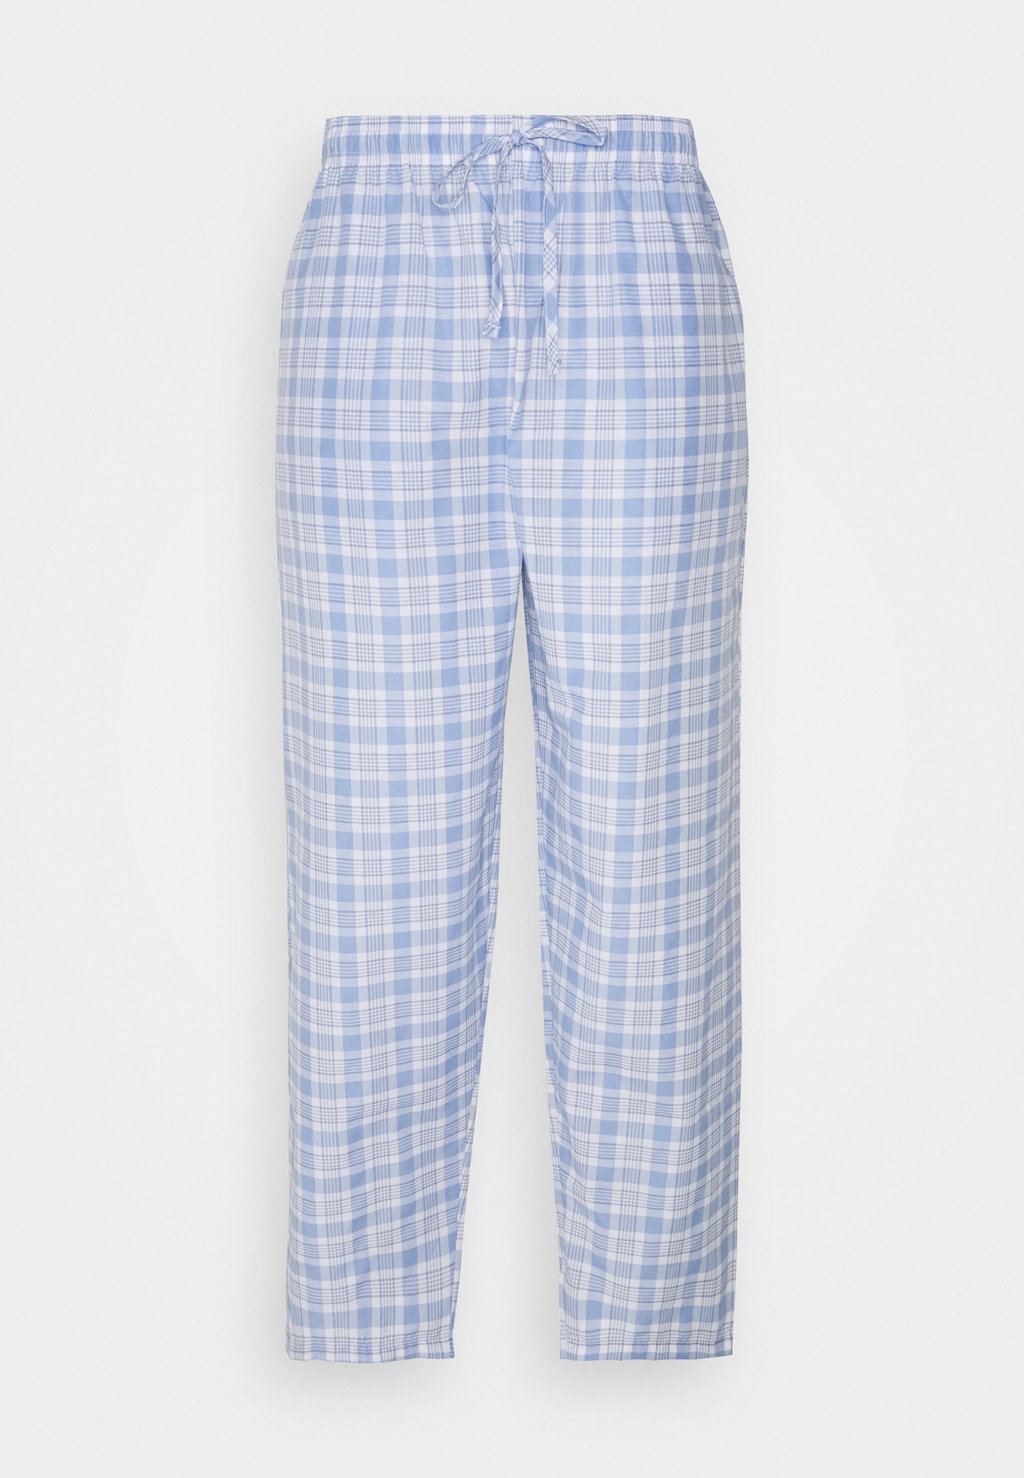 Пижамные штаны Pier One, голубой/белый